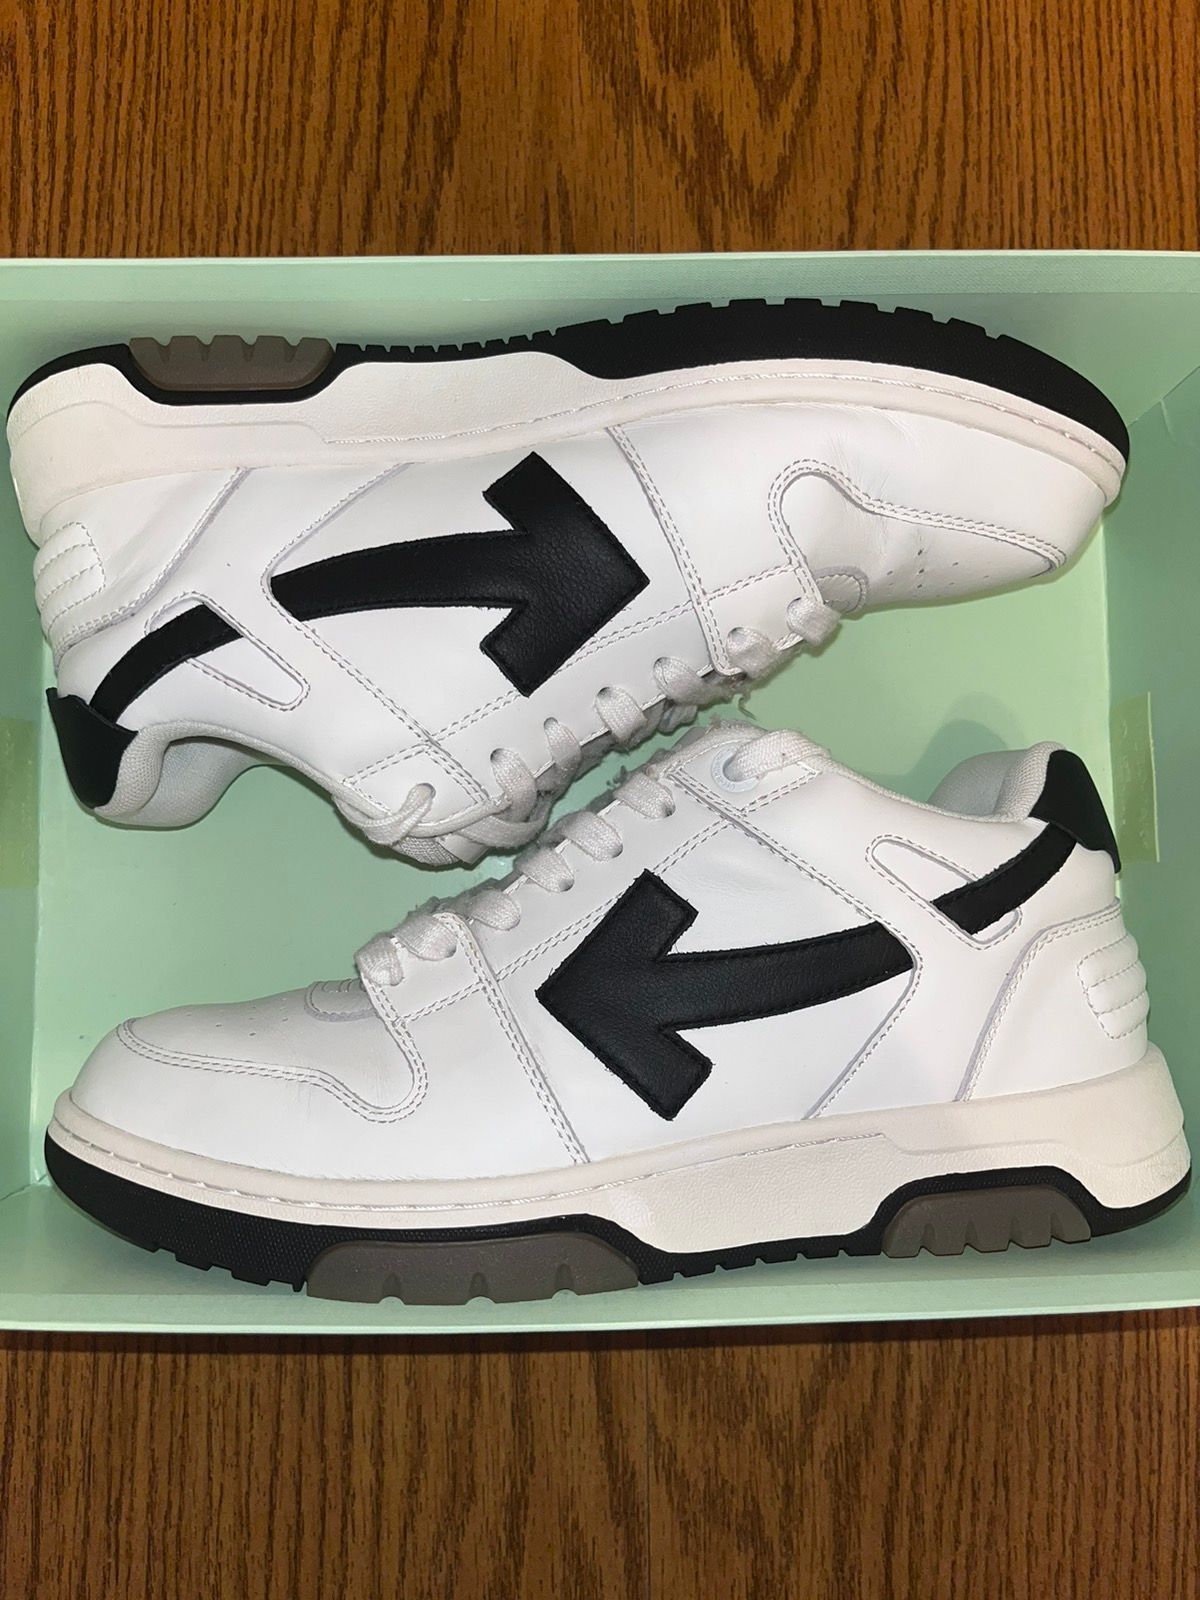 🔥$4,000 Sneakers 🔥 *Louis Vuitton X OFF WHITE X Jordan* By Ceeze 